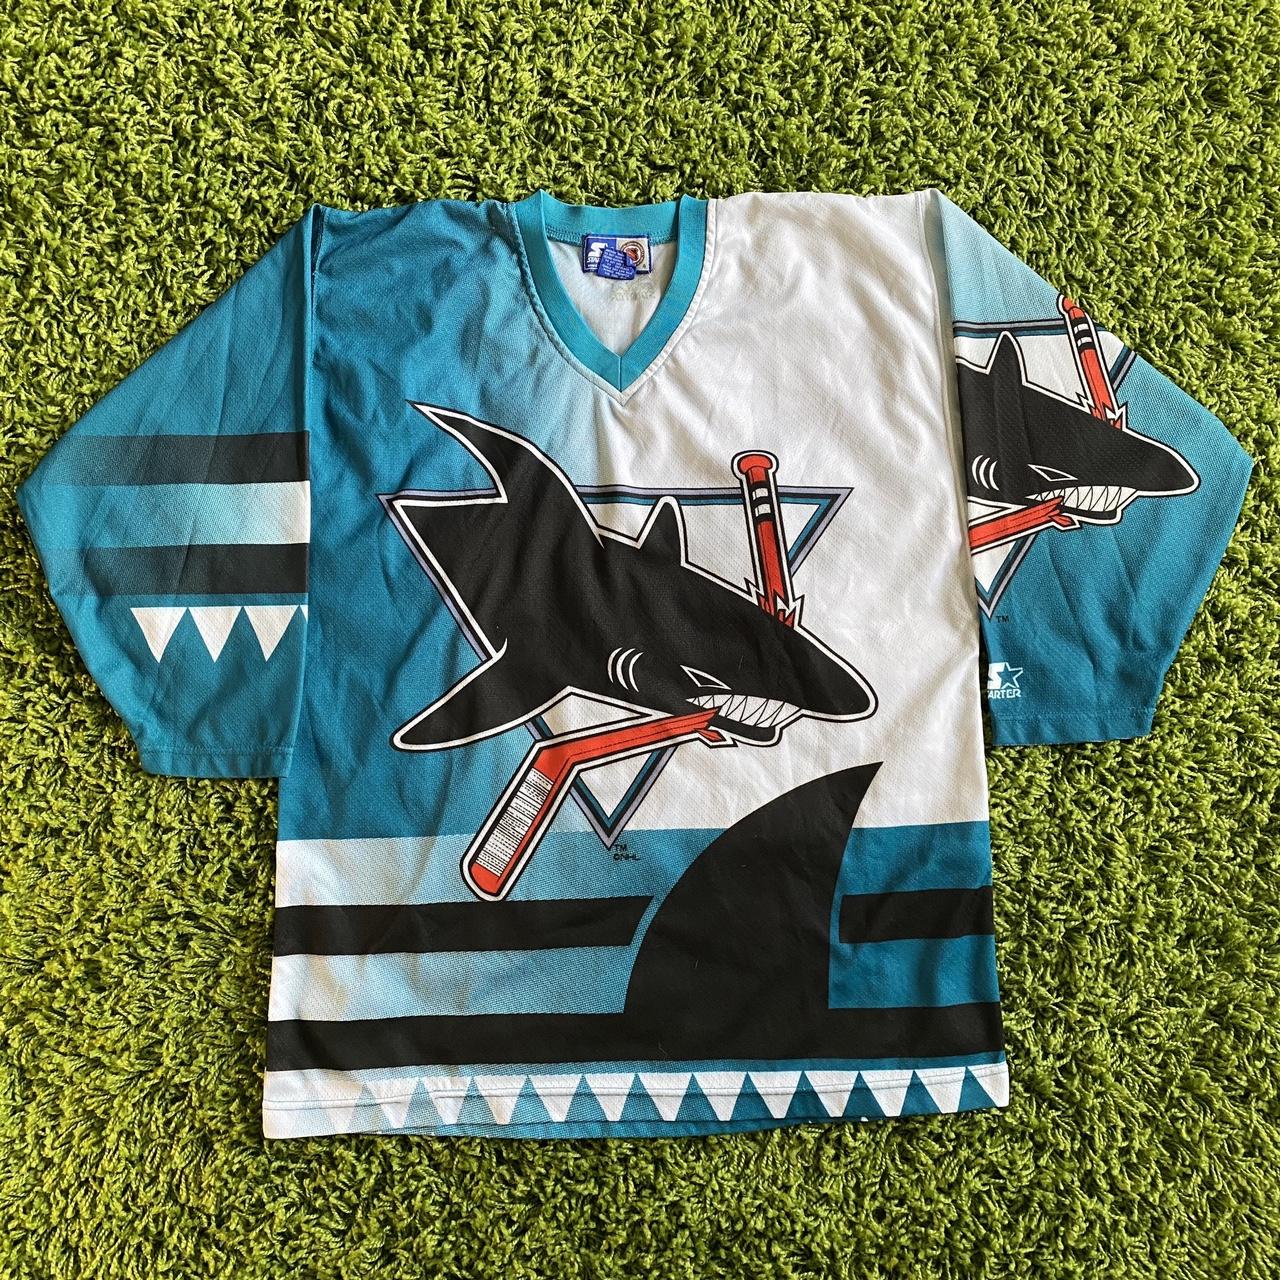 San Jose Sharks Authentic CCM Game Jersey Size Medium